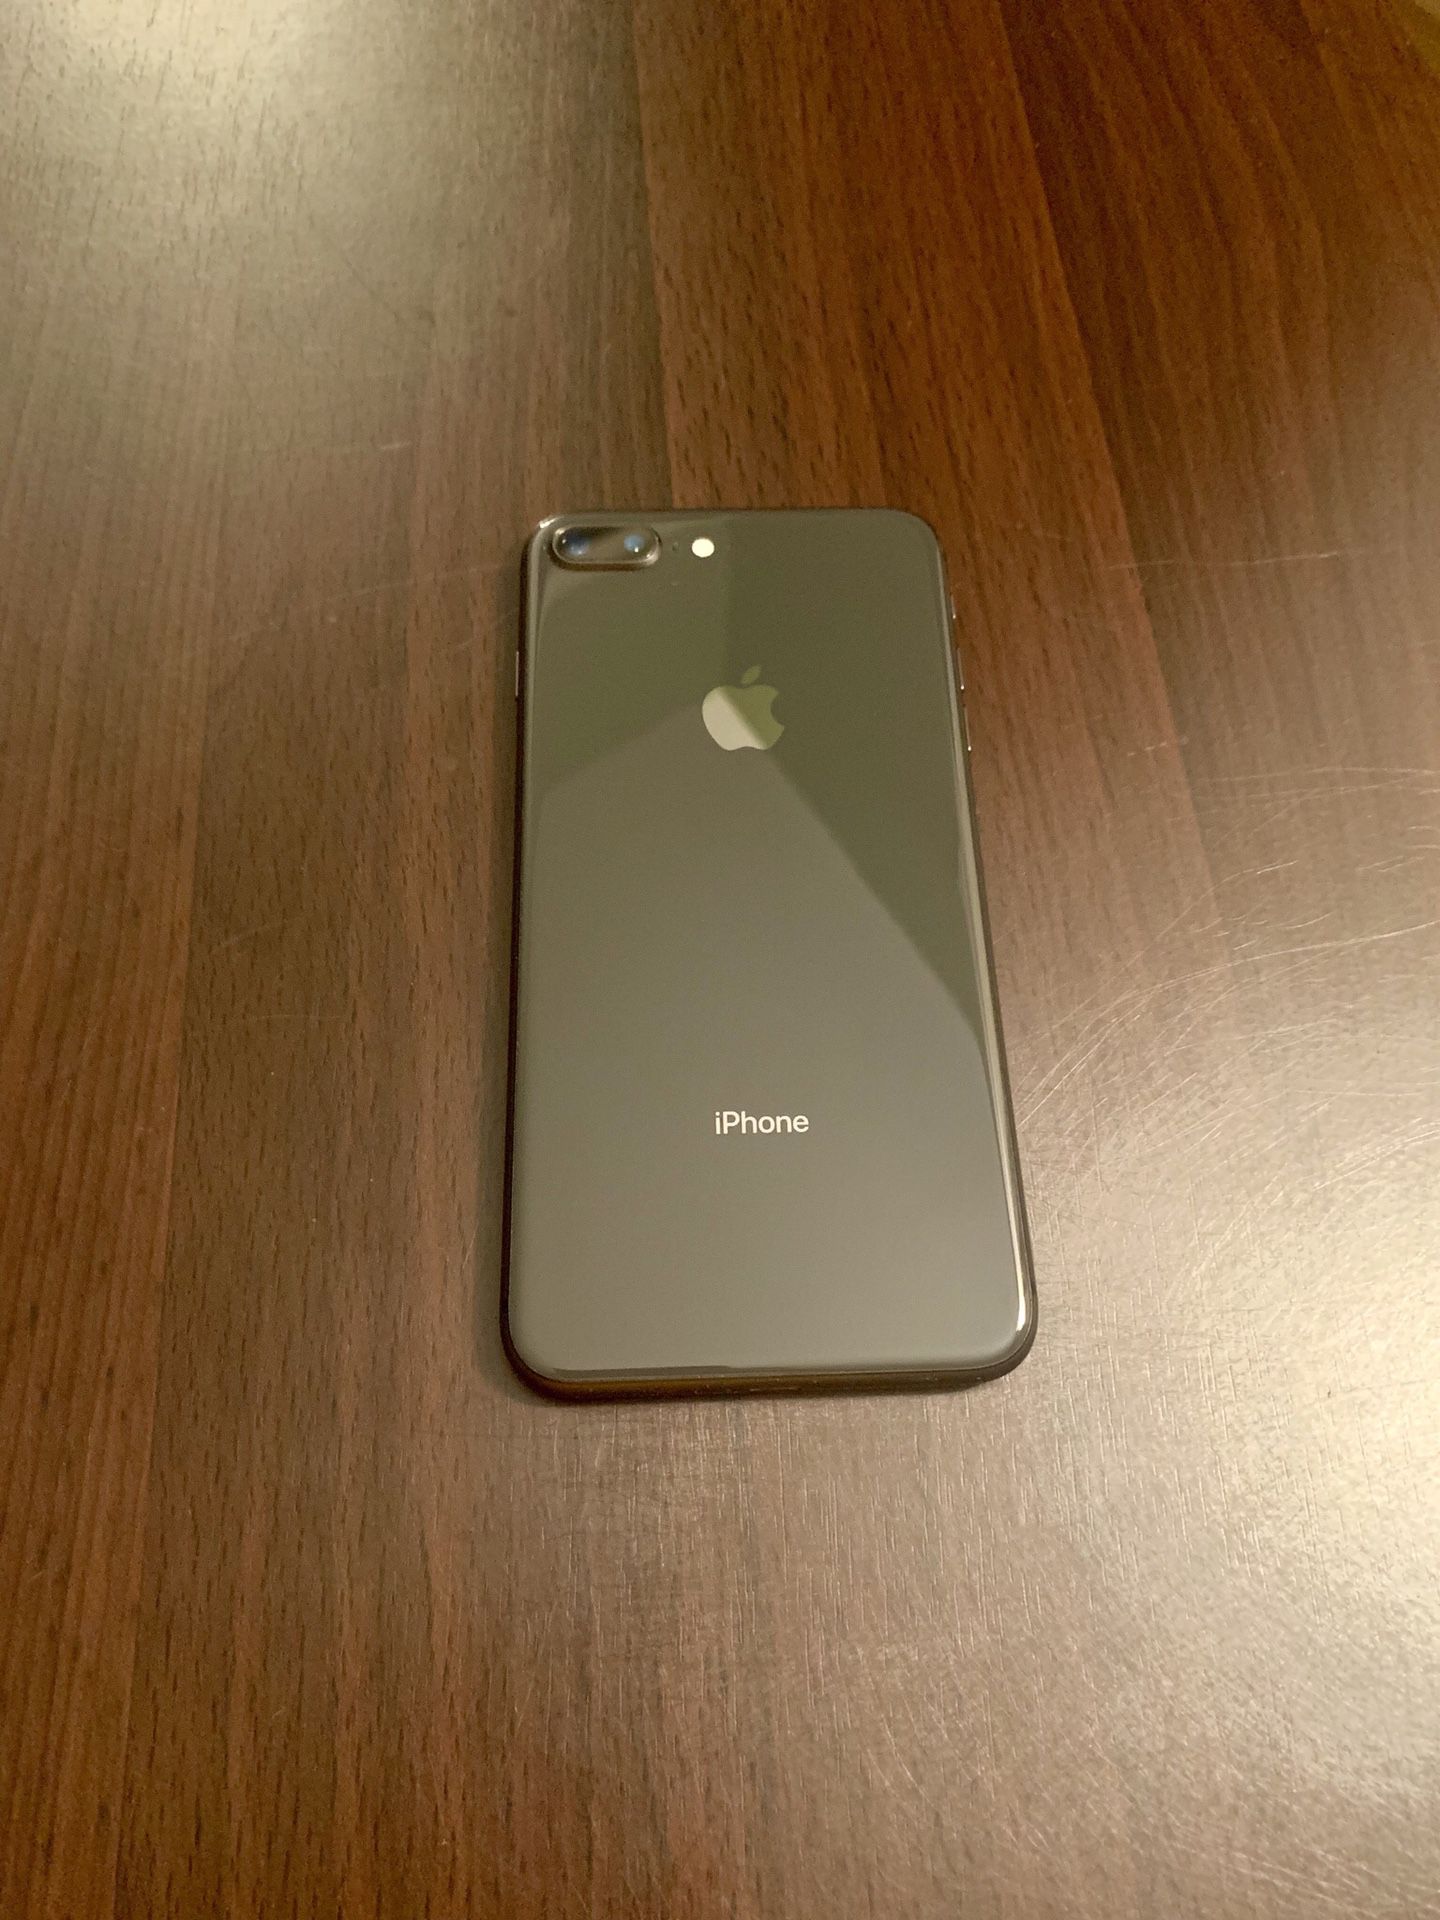 iPhone 8 Plus, 64 GB, Factory Unlocked